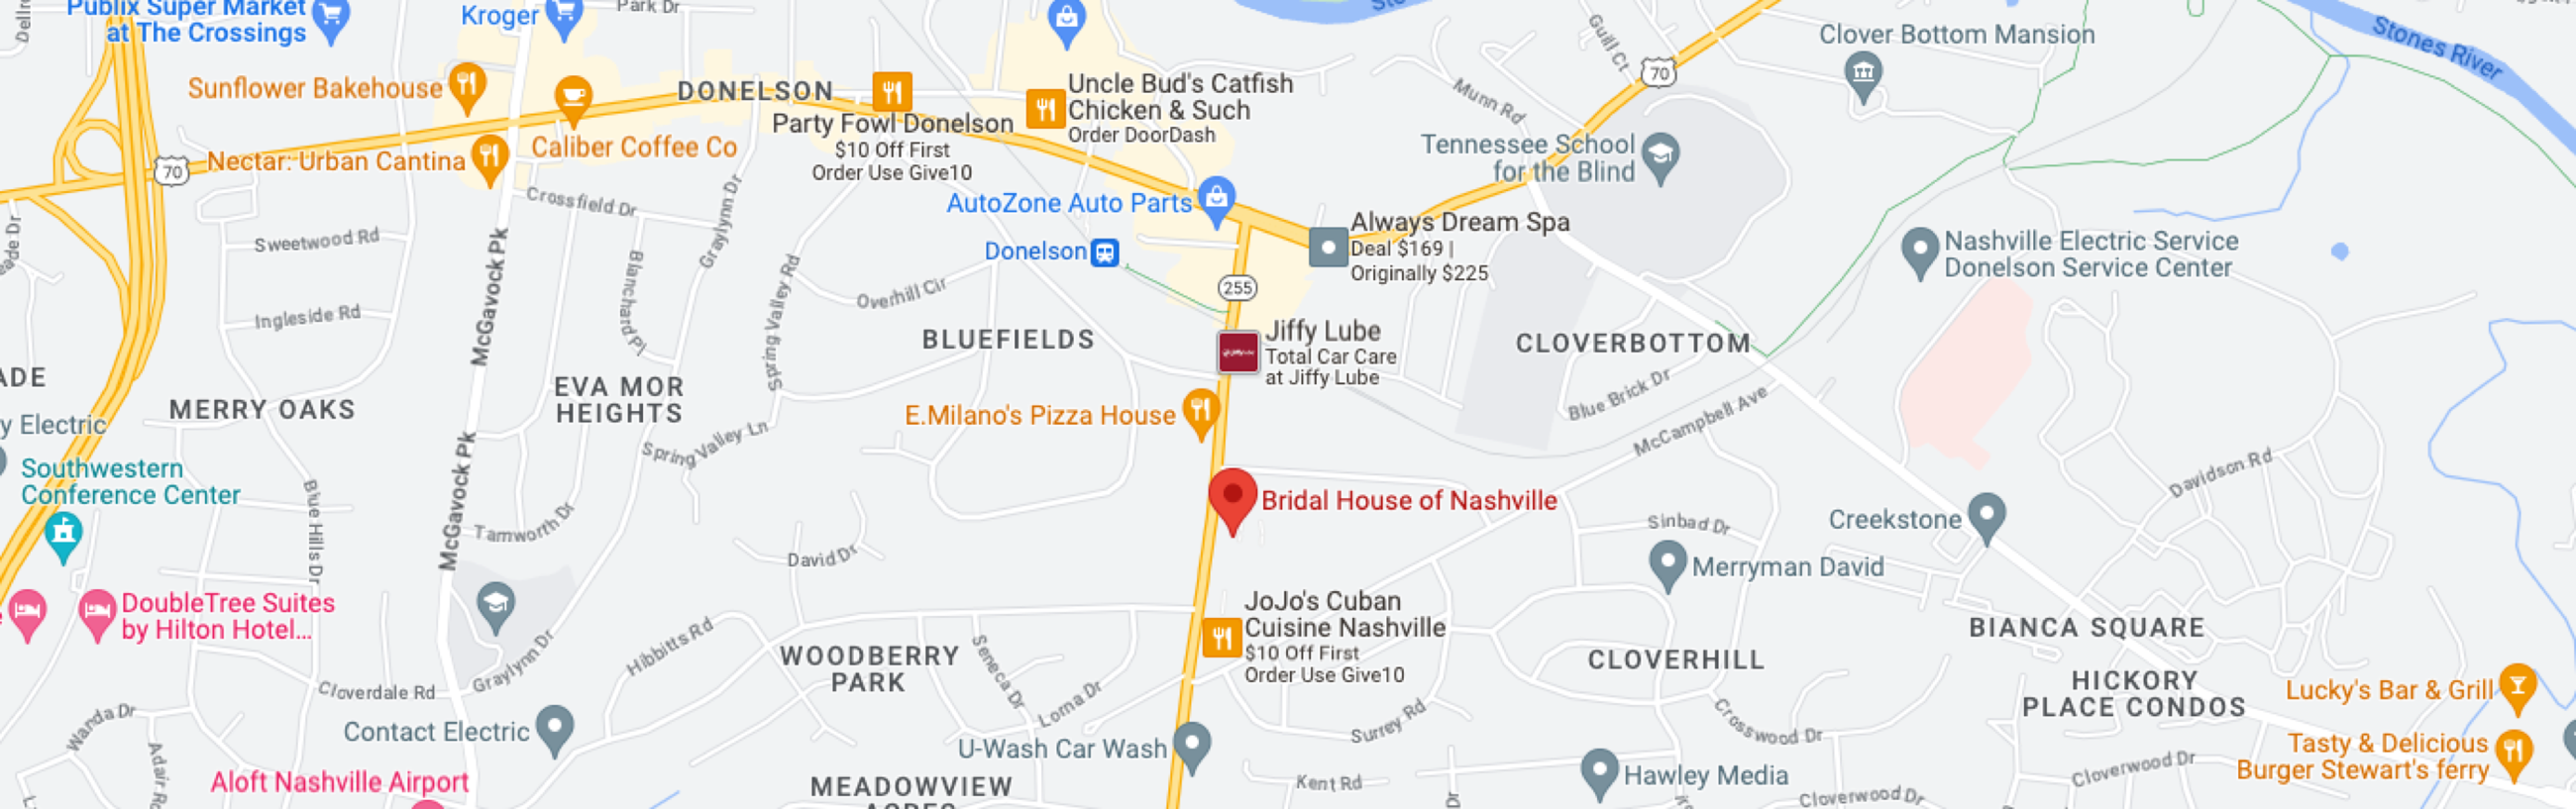 Bridal Hous eof Nashville Map - Desktop Image